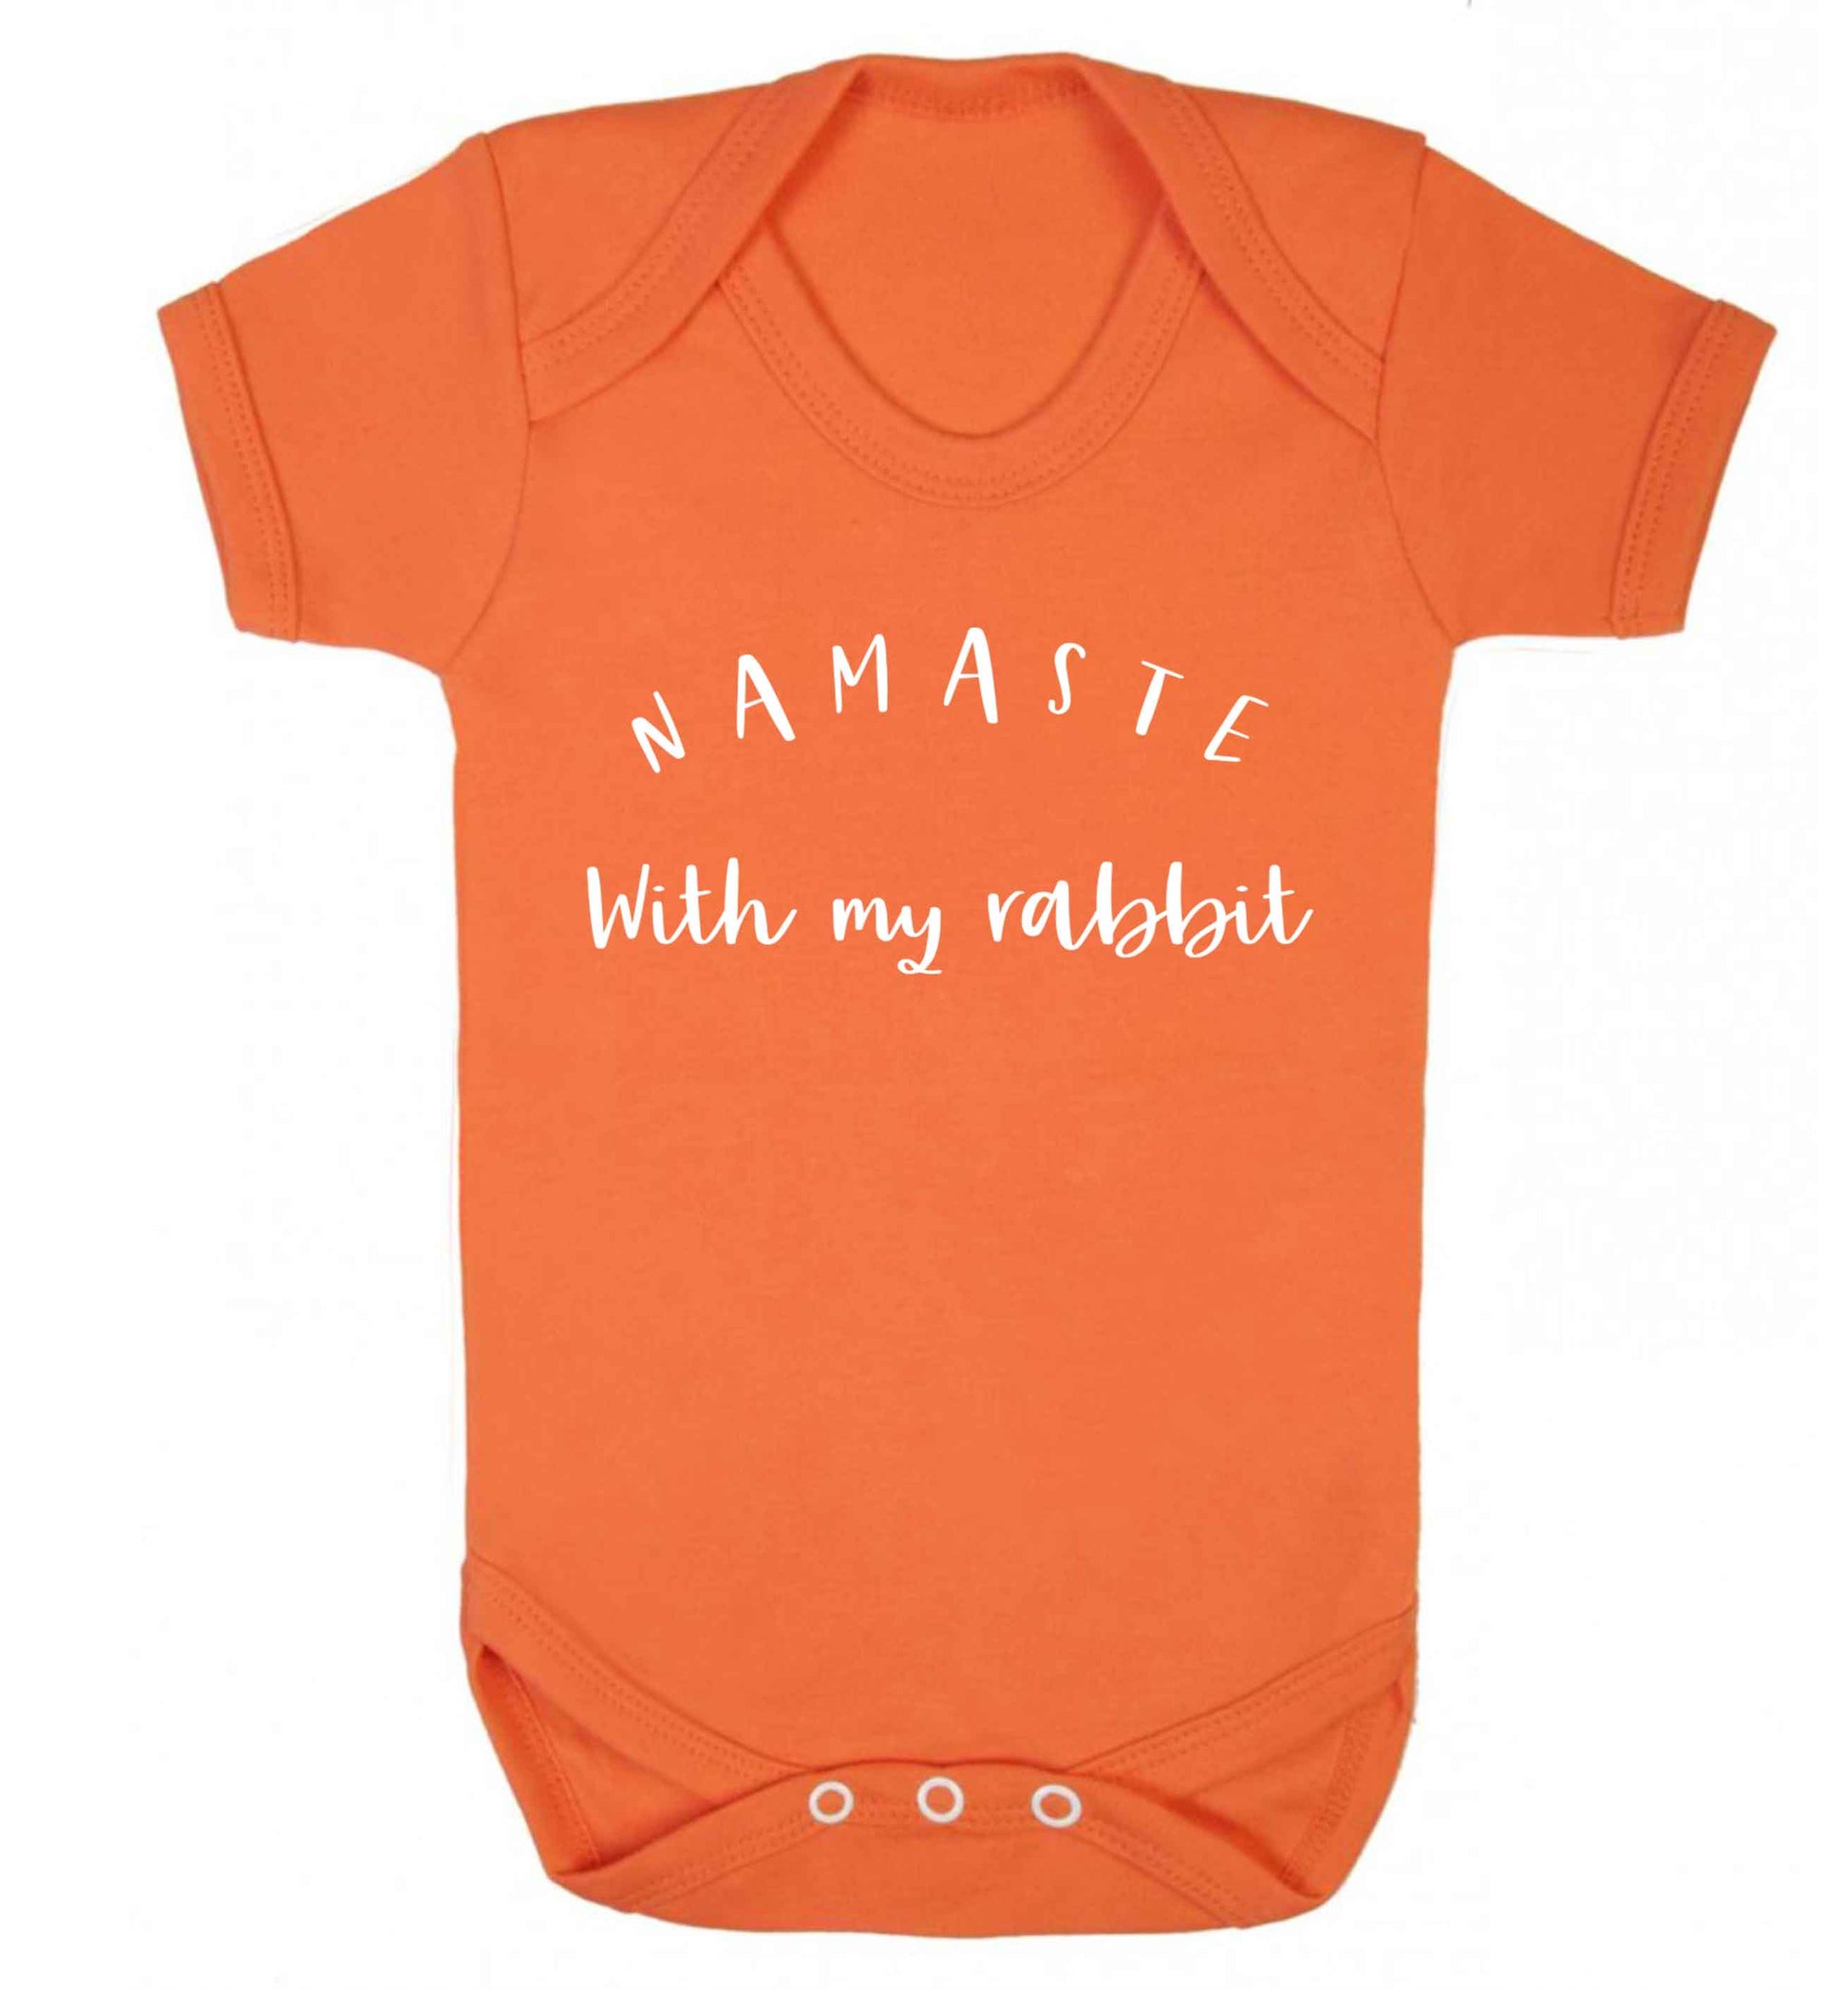 Namaste with my rabbit Baby Vest orange 18-24 months